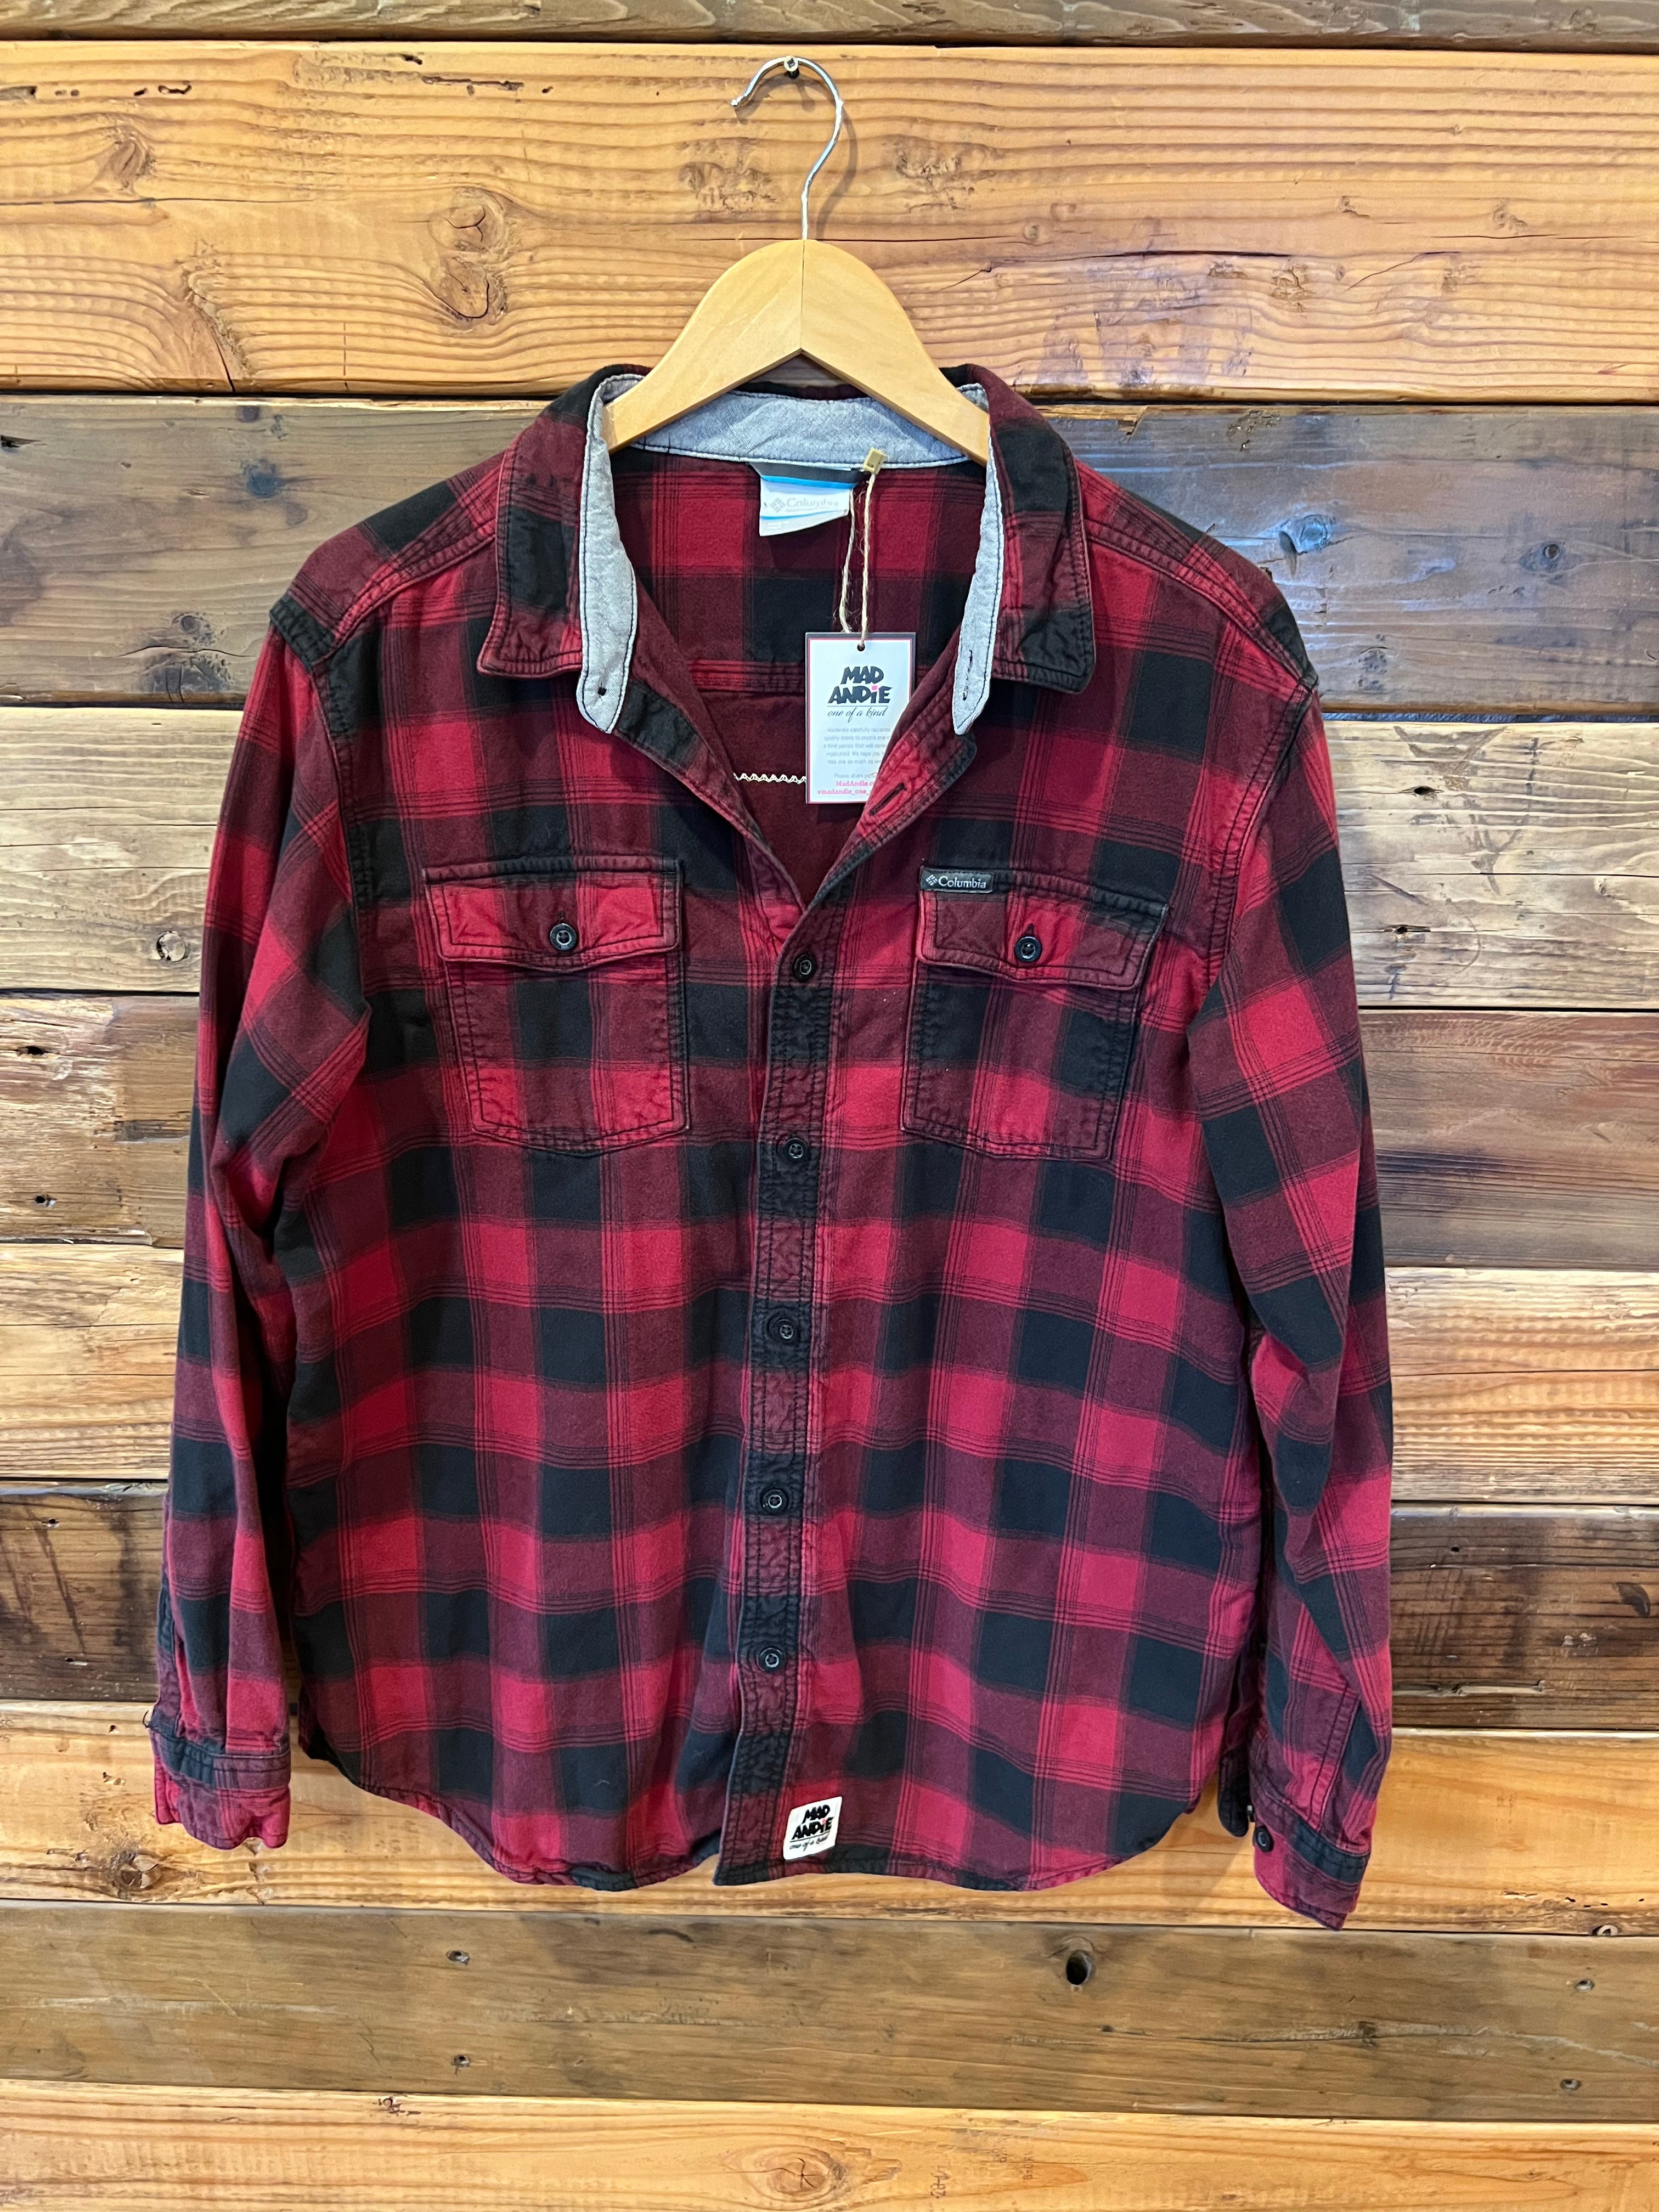 San Francisco 49ers one of a kind custom Columbia lumberjack plaid shirt